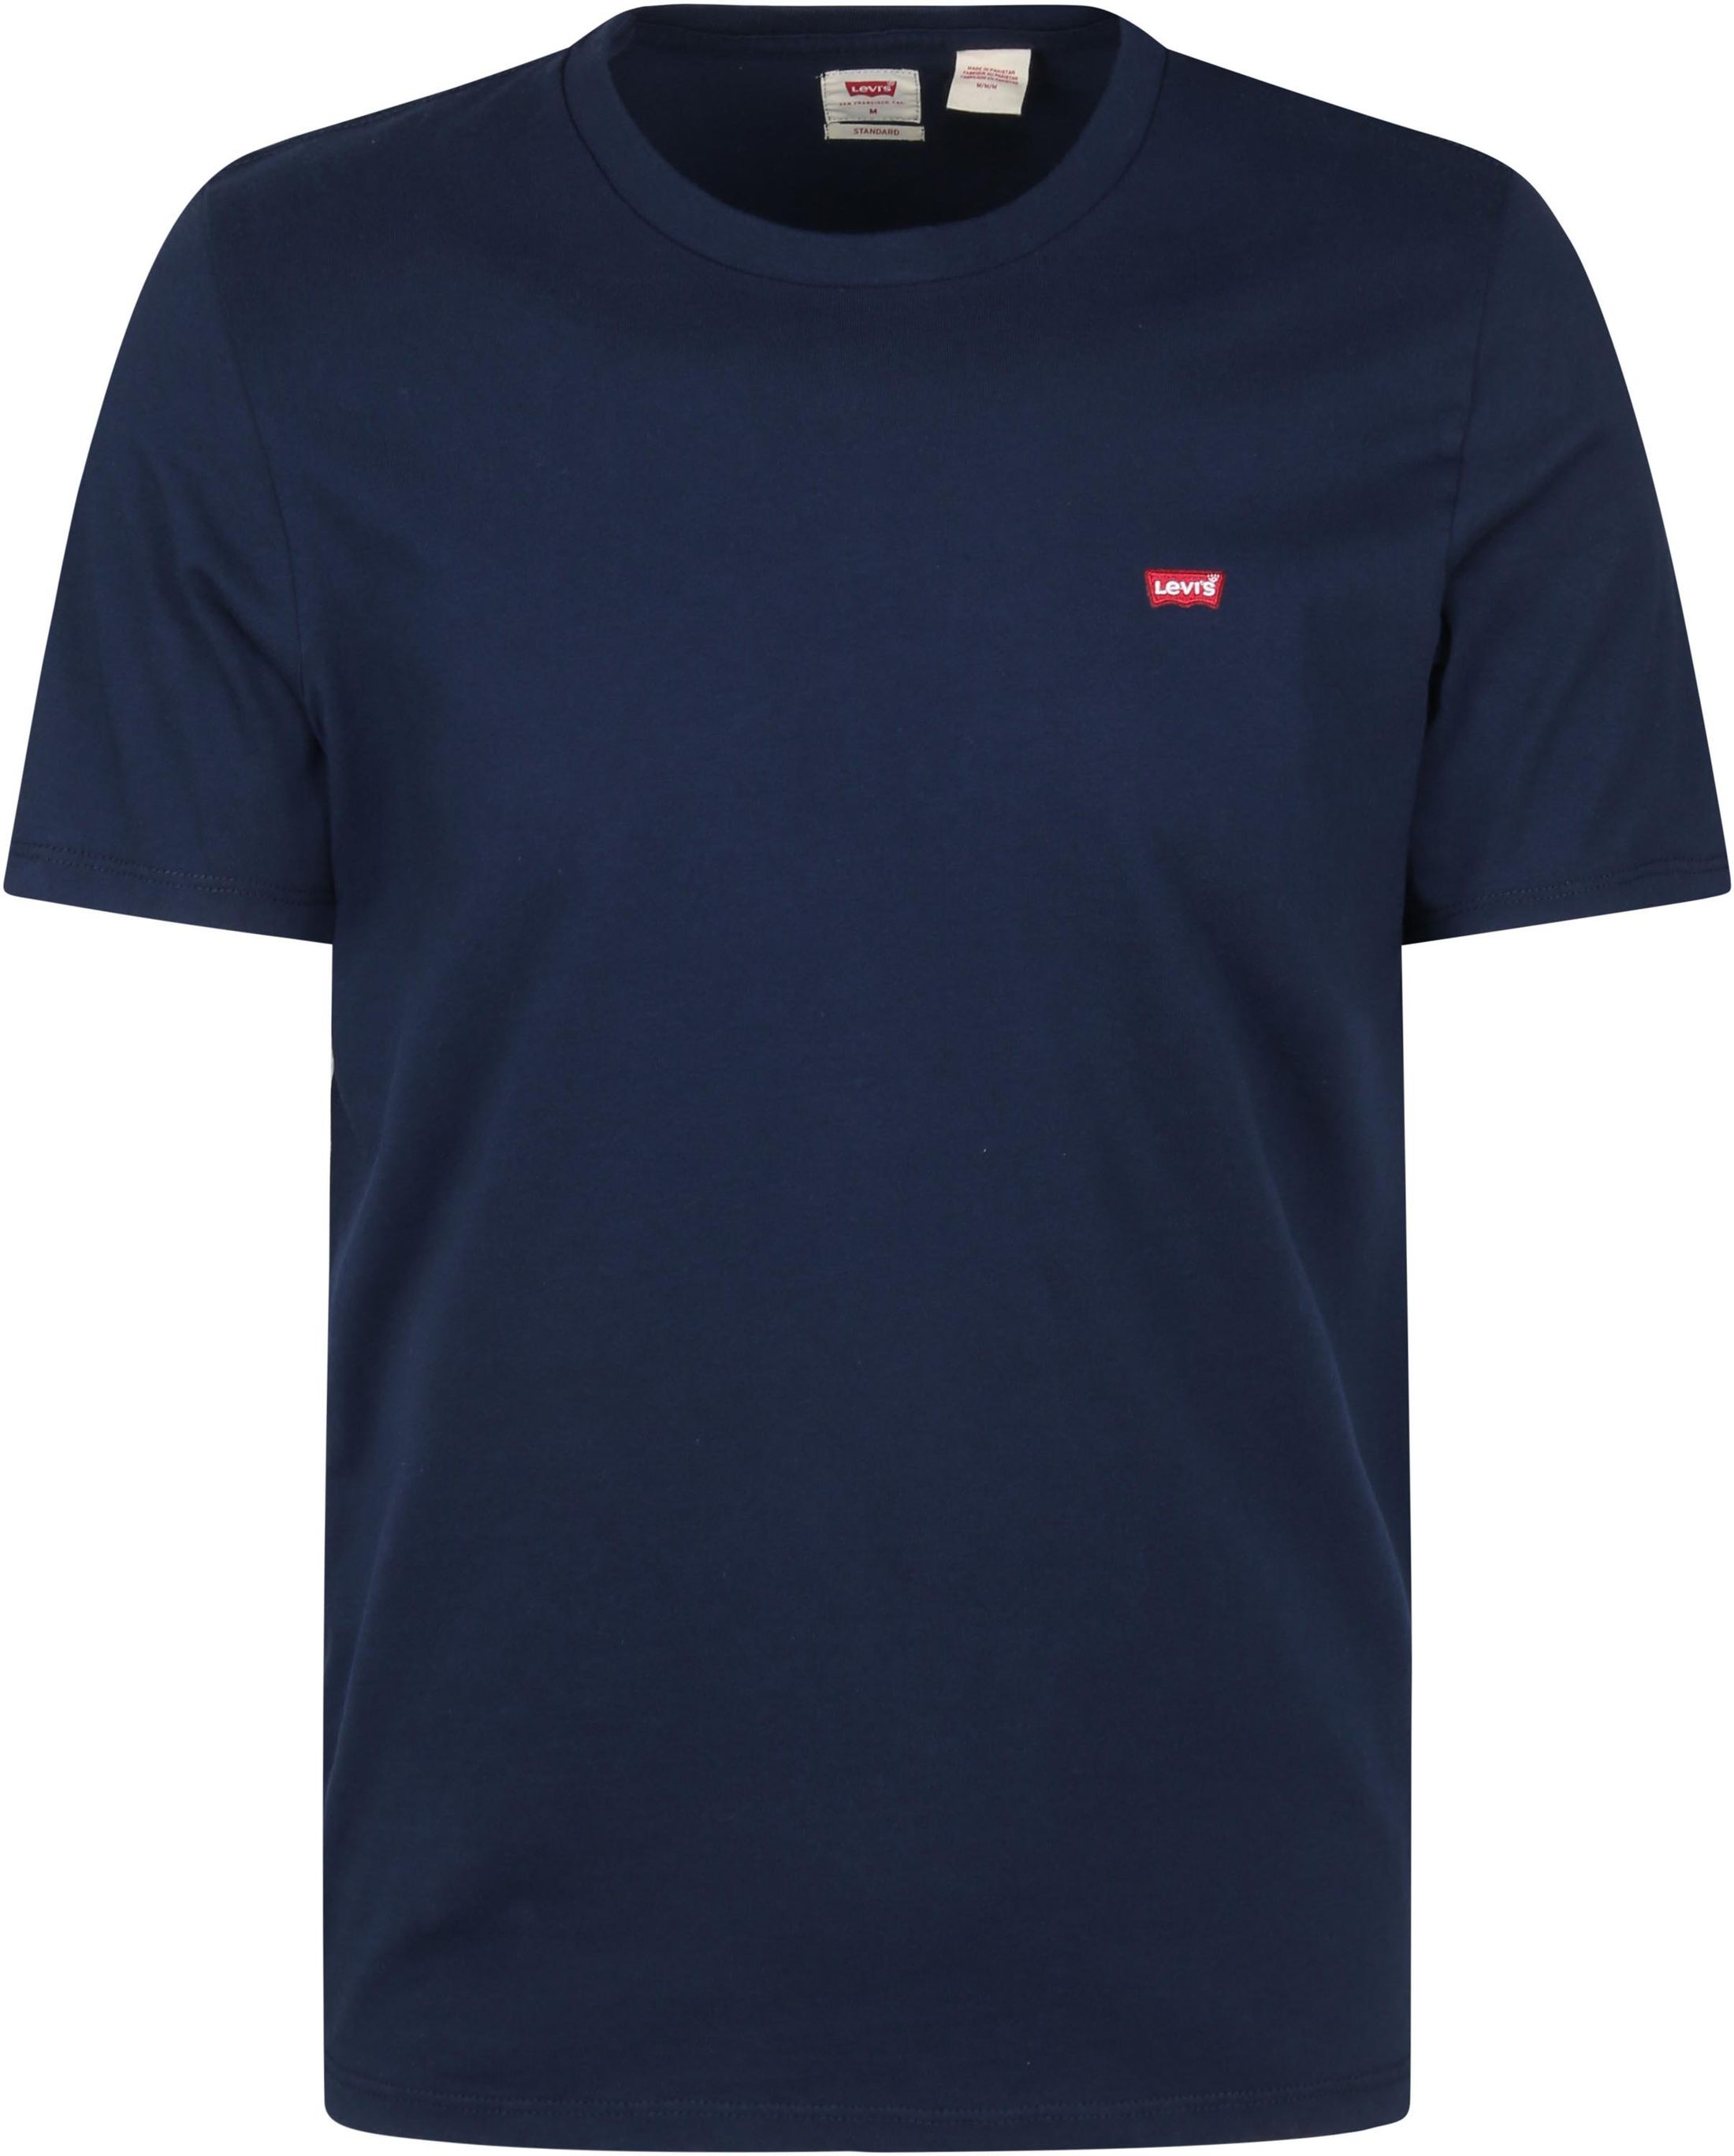 Levi's T Shirt Original Dark Blue Dark Blue size M